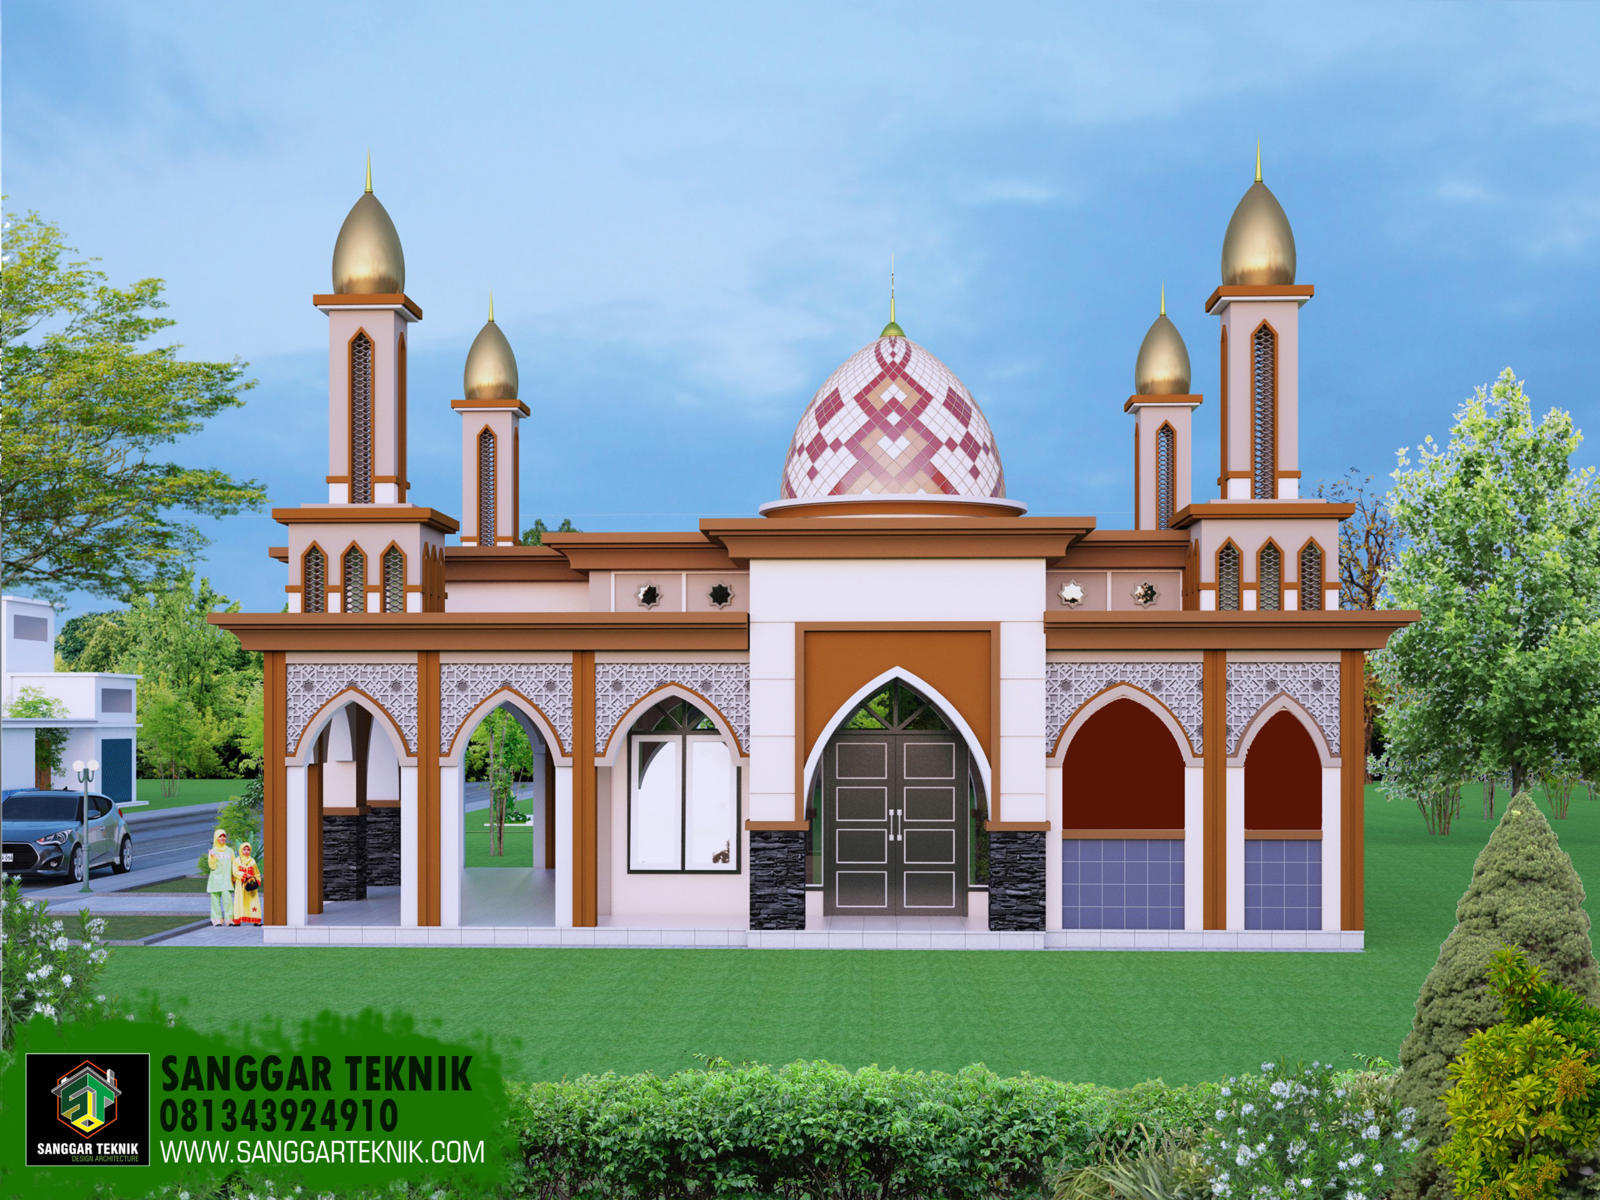  Desain  Pagar Dan  Gapura Masjid  Minimalis Quotes Diary f